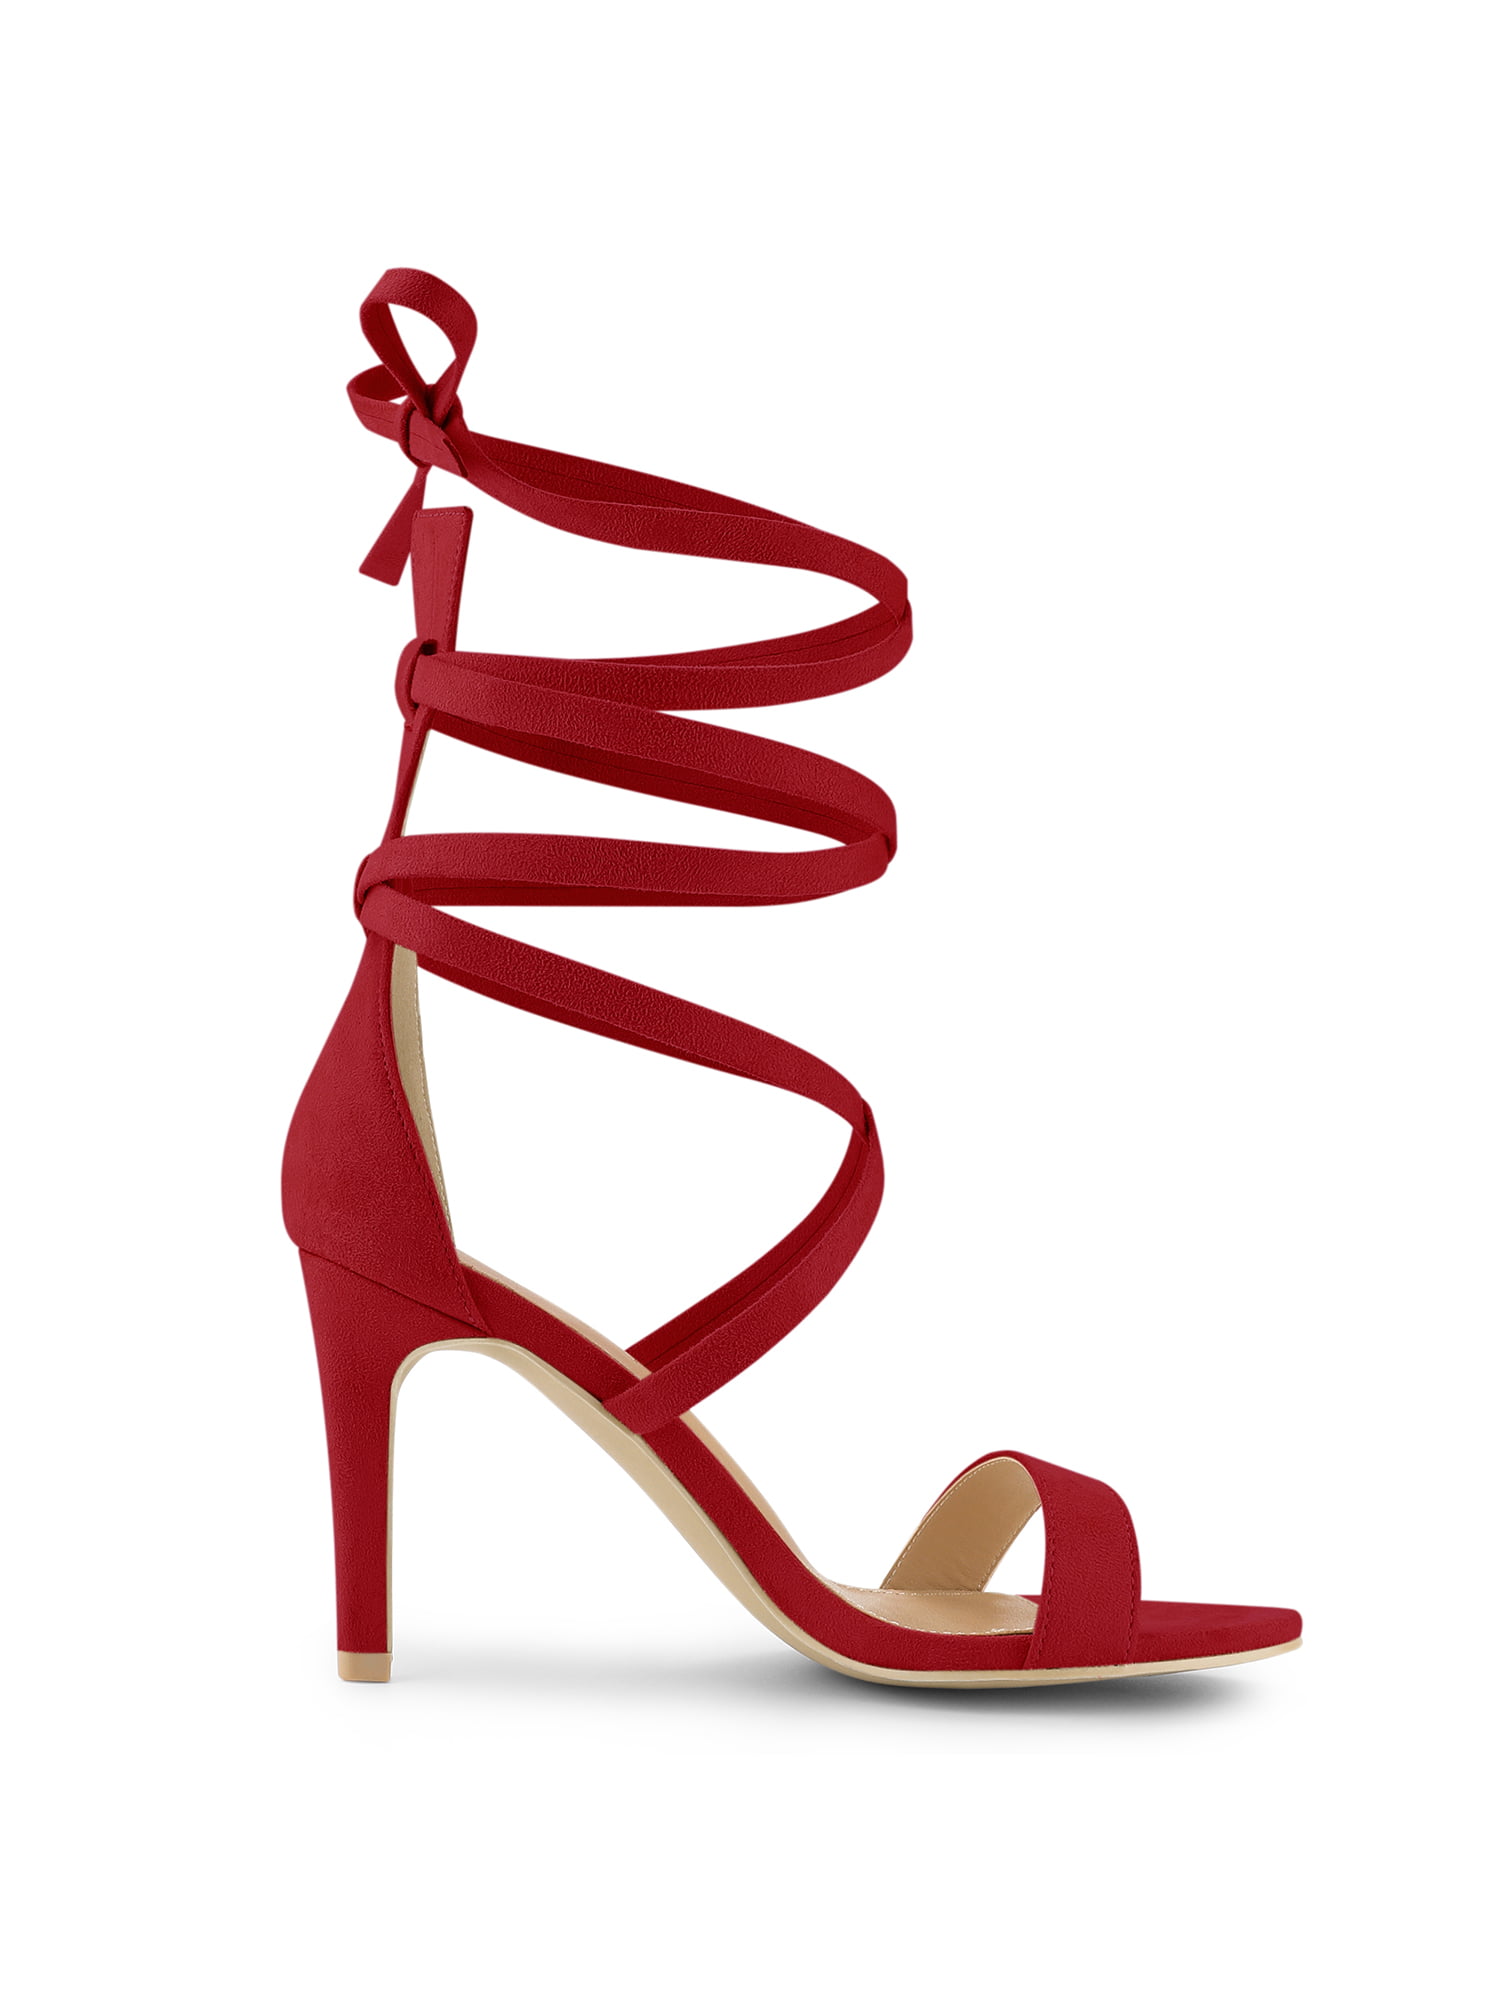 Hot Lace-up Pointed Toe Heels | Heels, Stiletto heels, High heels